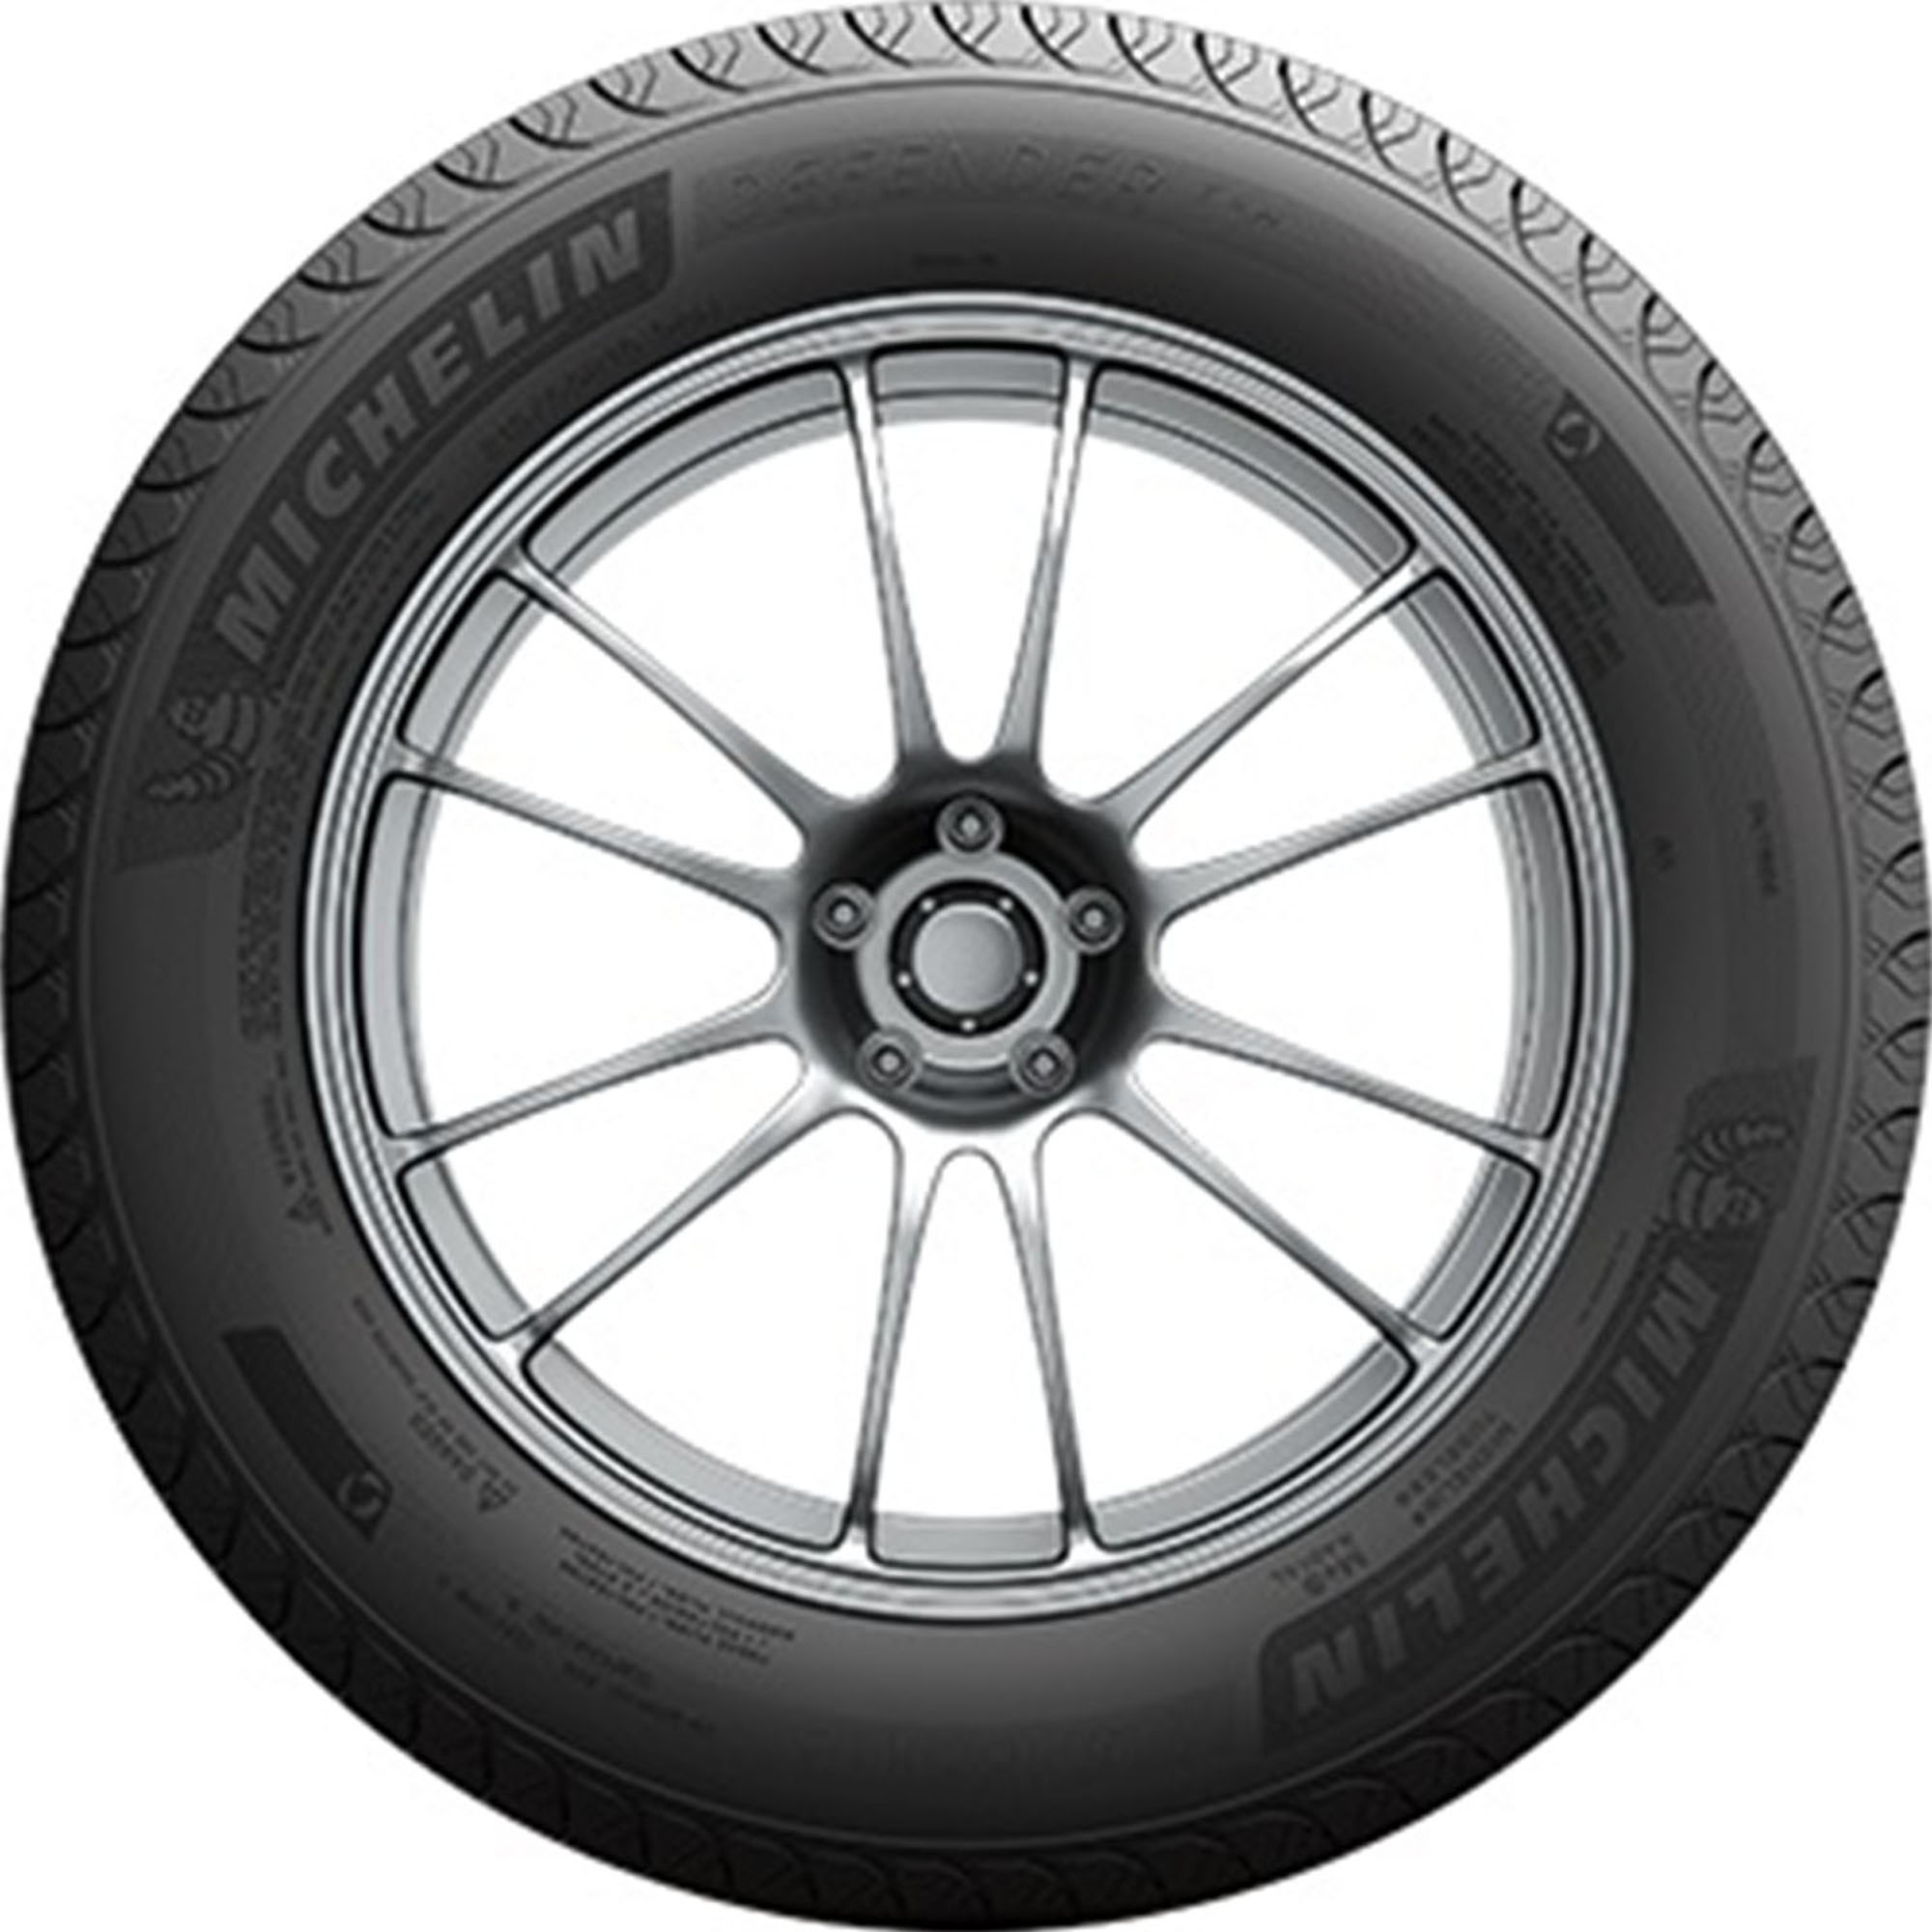 Michelin Defender T+H All Season 195/65R15 91H Passenger Tire - image 3 of 4